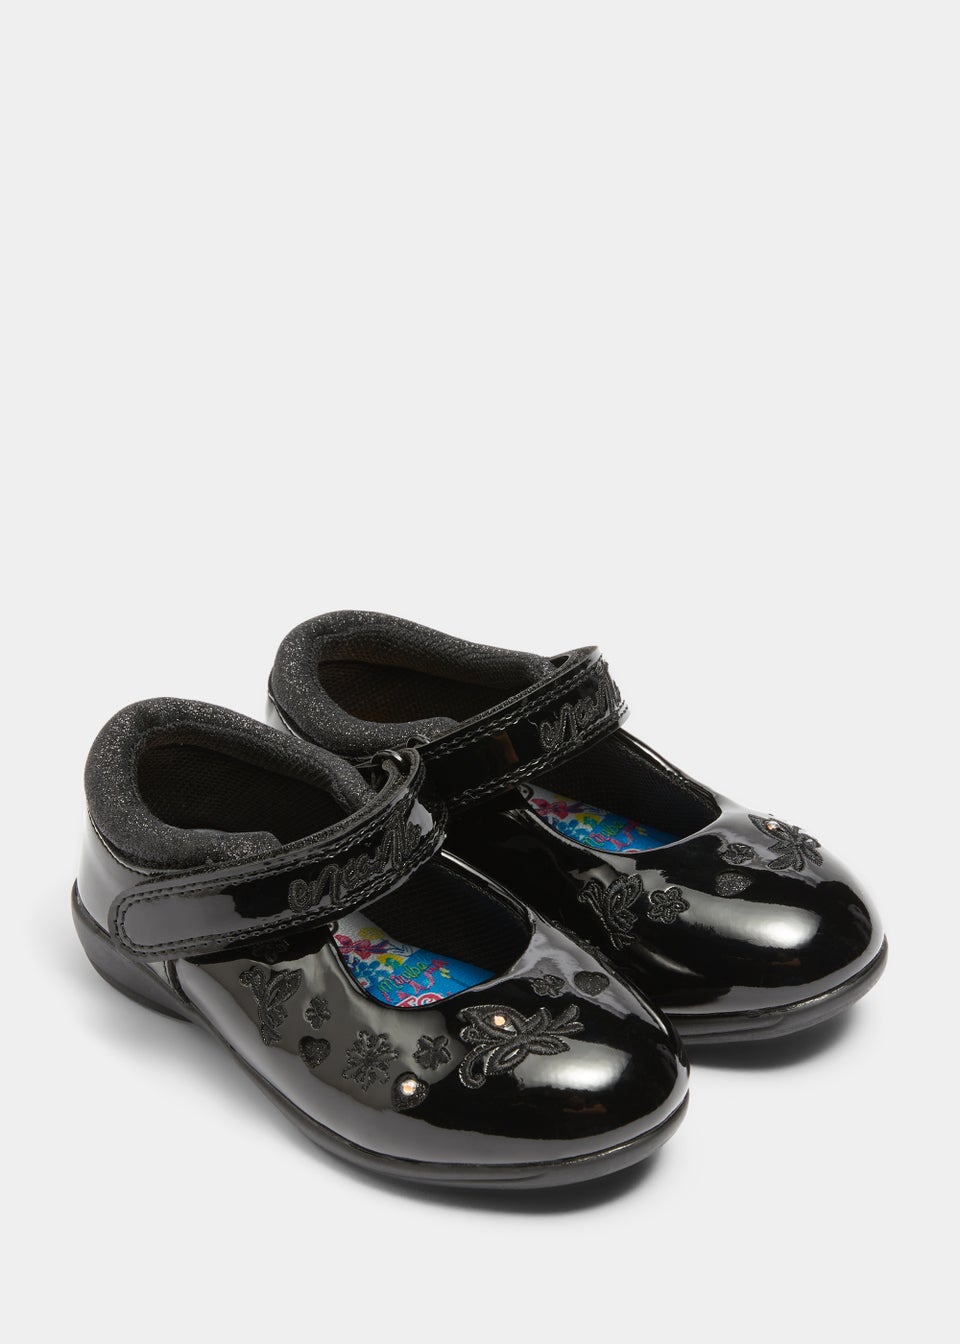 Kids Black Patent Disney Encanto Light Up School Shoes (Younger 6-12)